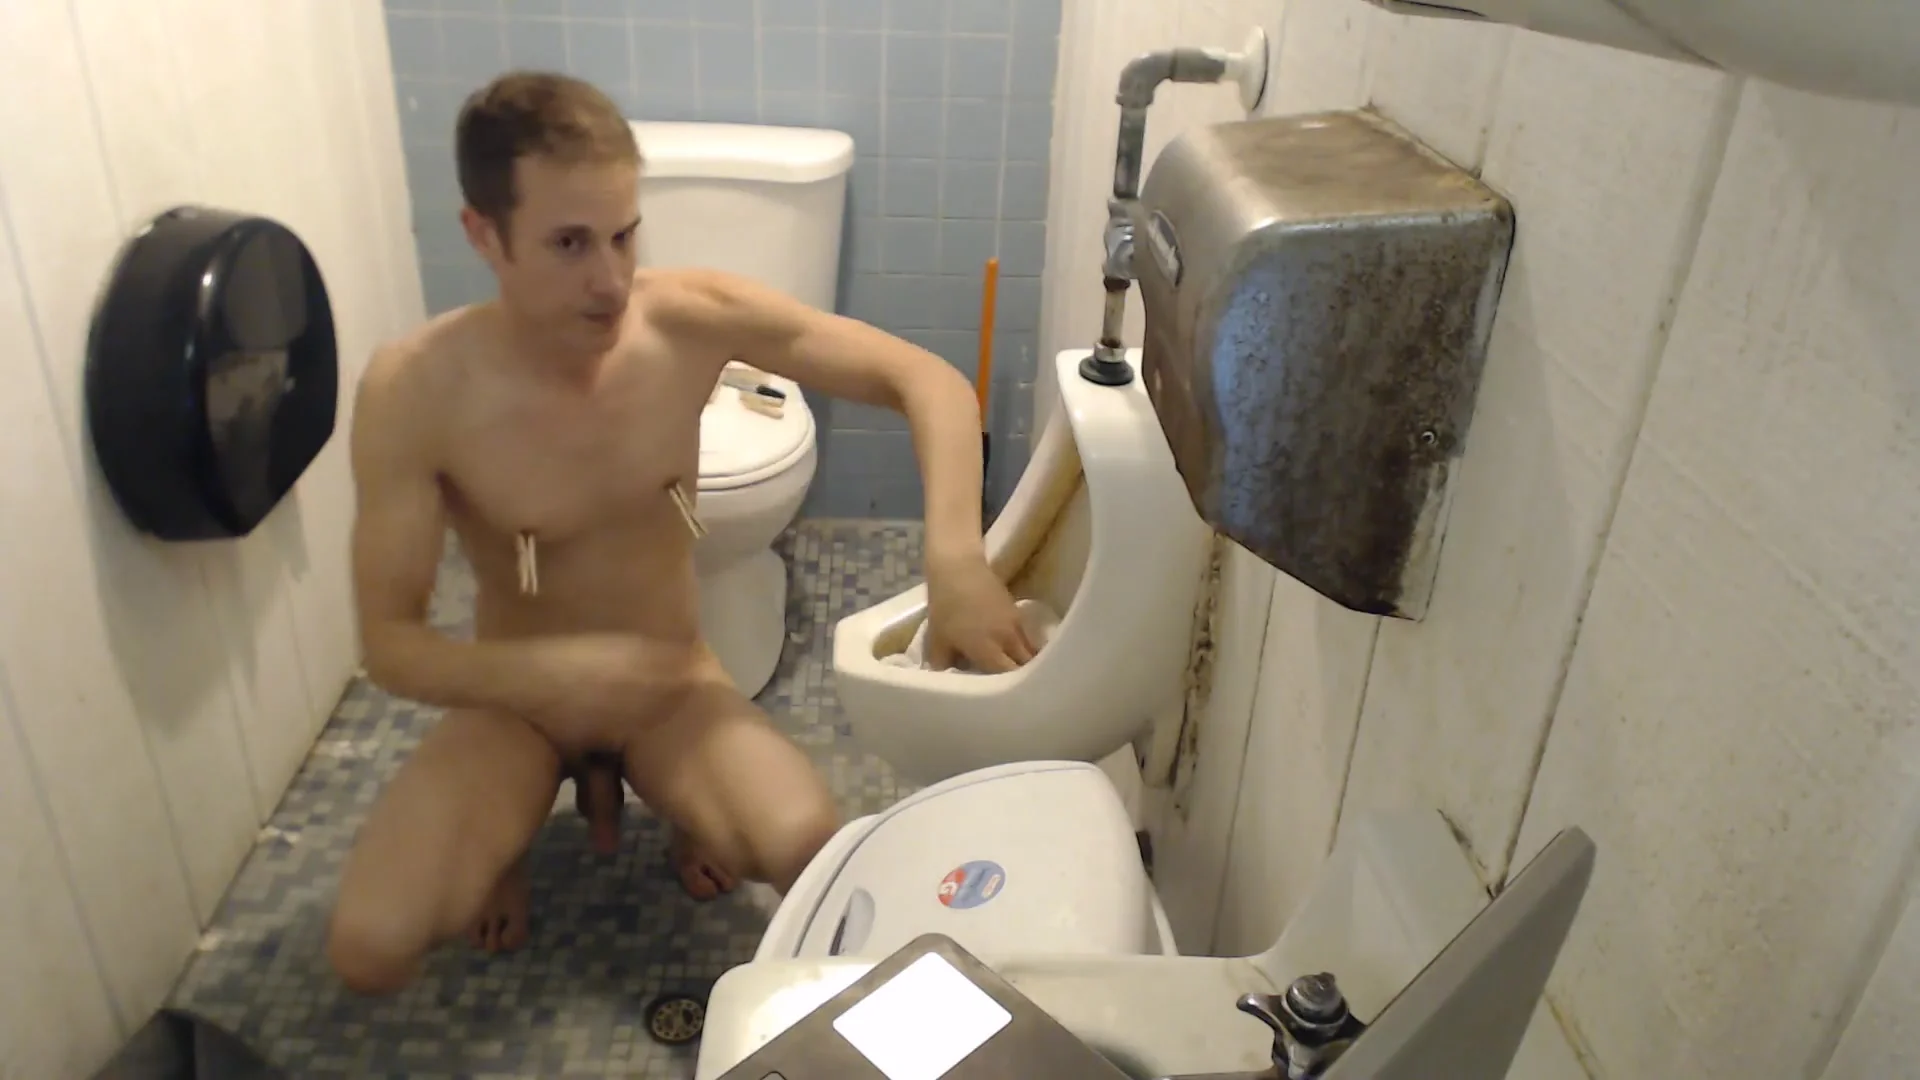 Sextoymatt cleaning urinal - ThisVid.com